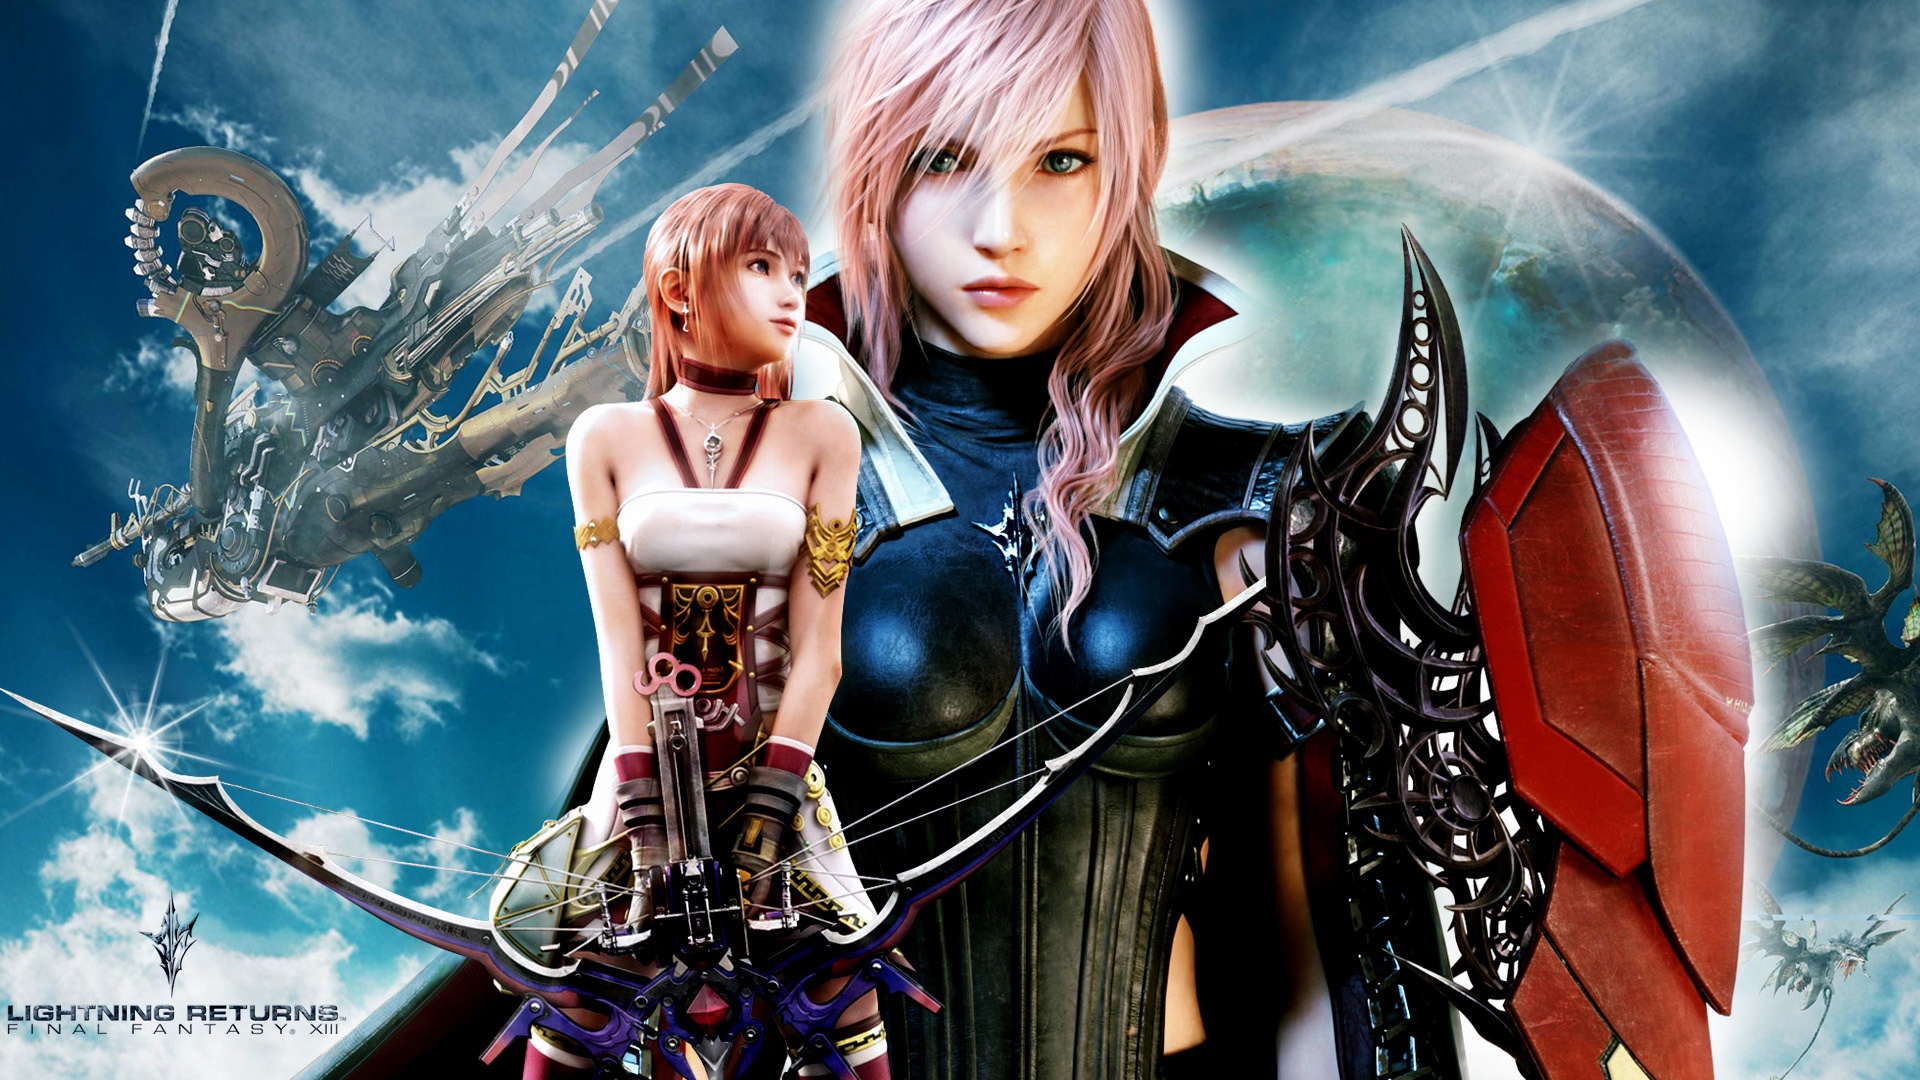 Lightning Returns Final Fantasy XIII Wallpapers HD Wallpapers